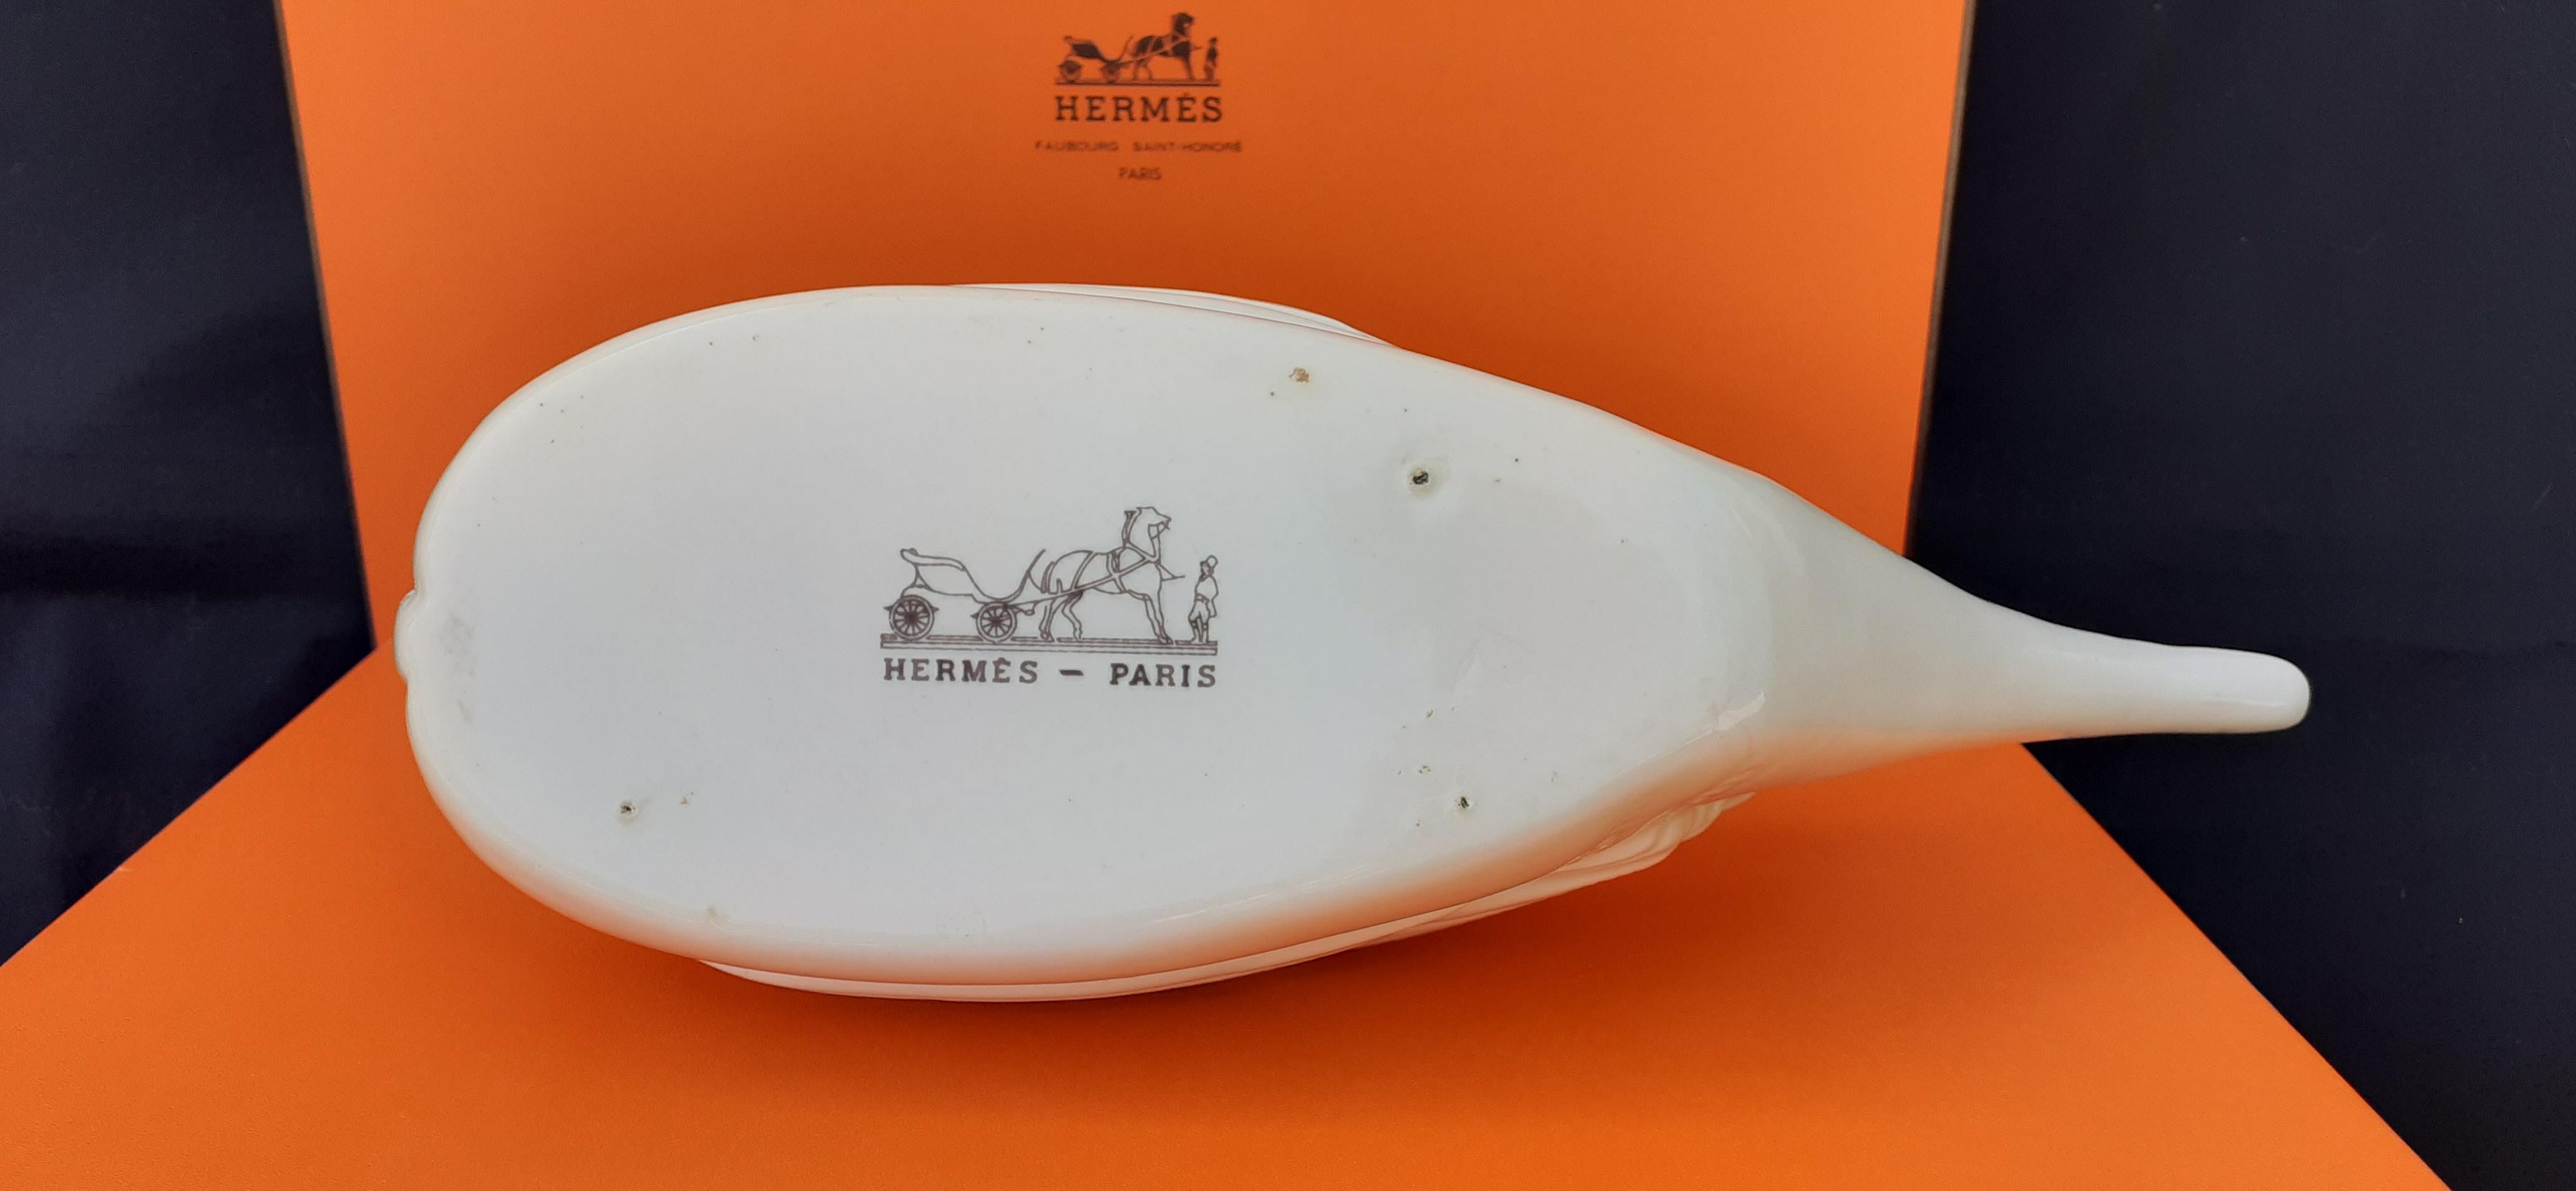 Exceptional Hermès Centerpiece Vase Ceramic Duck From La Mare aux Canards RARE For Sale 5